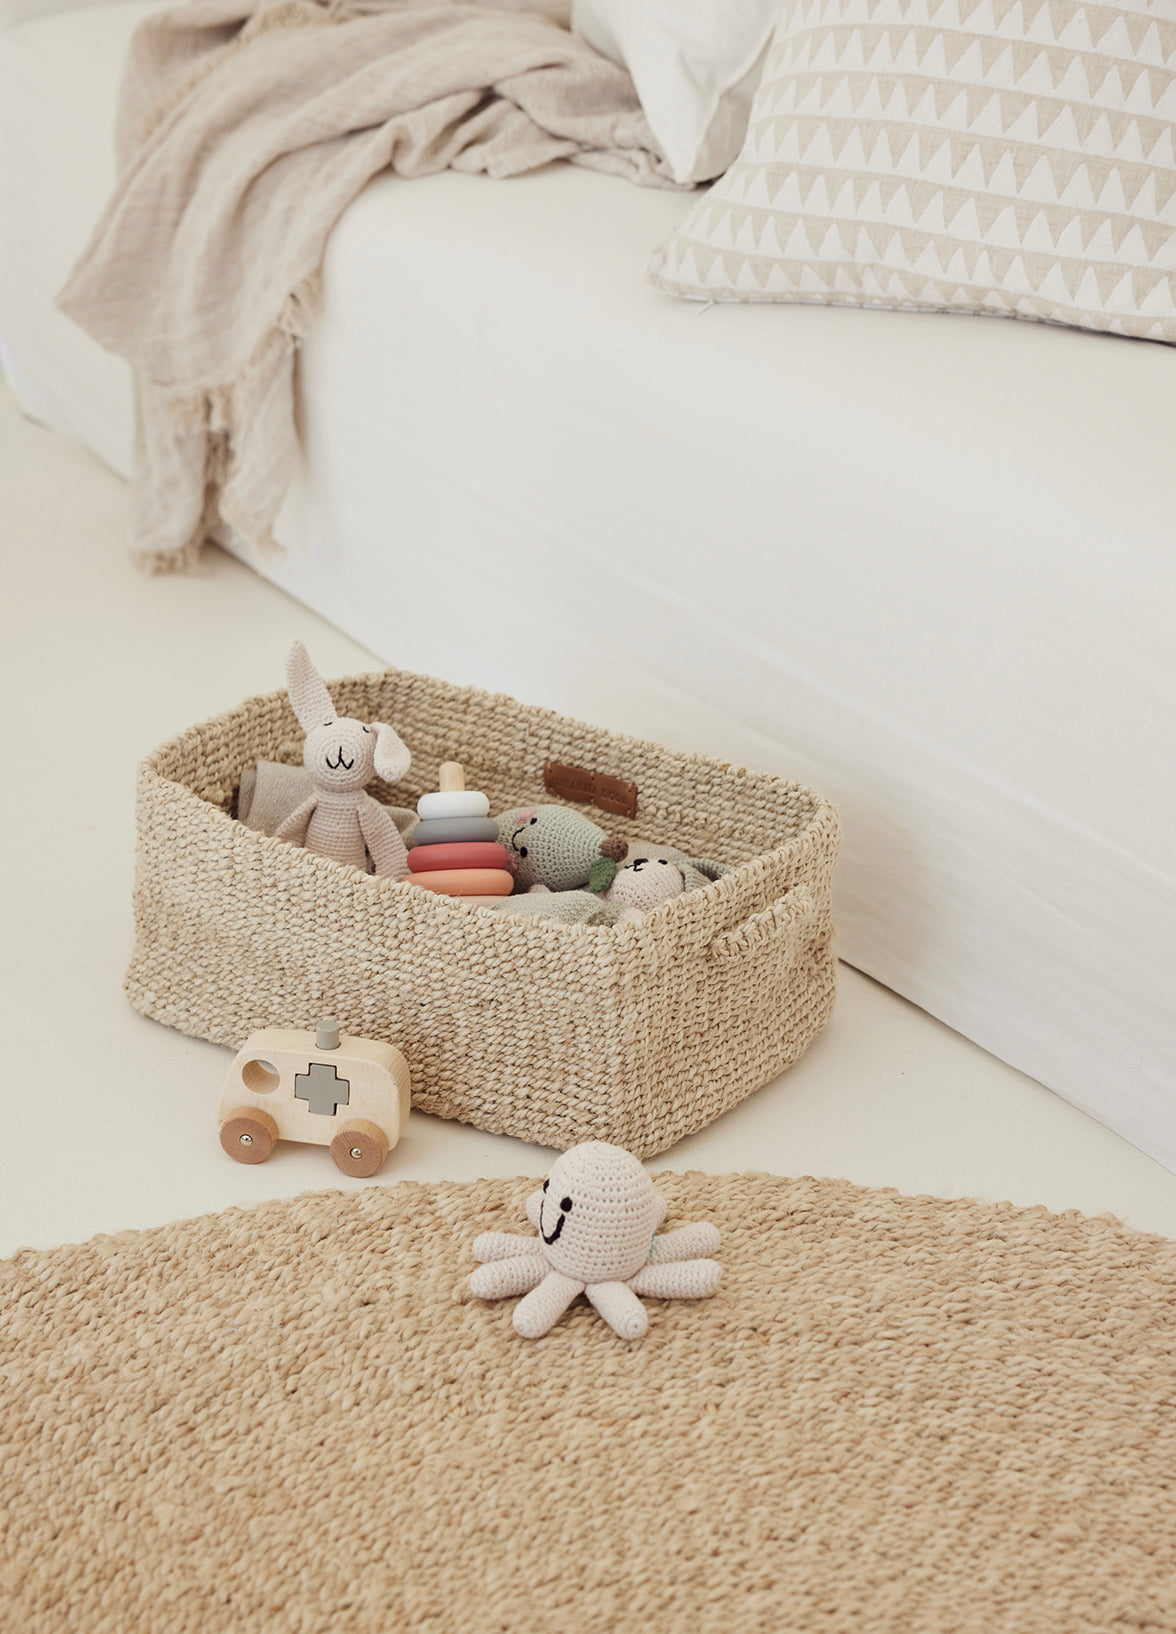 Childrens room storage - storing toys in natural jute baskets